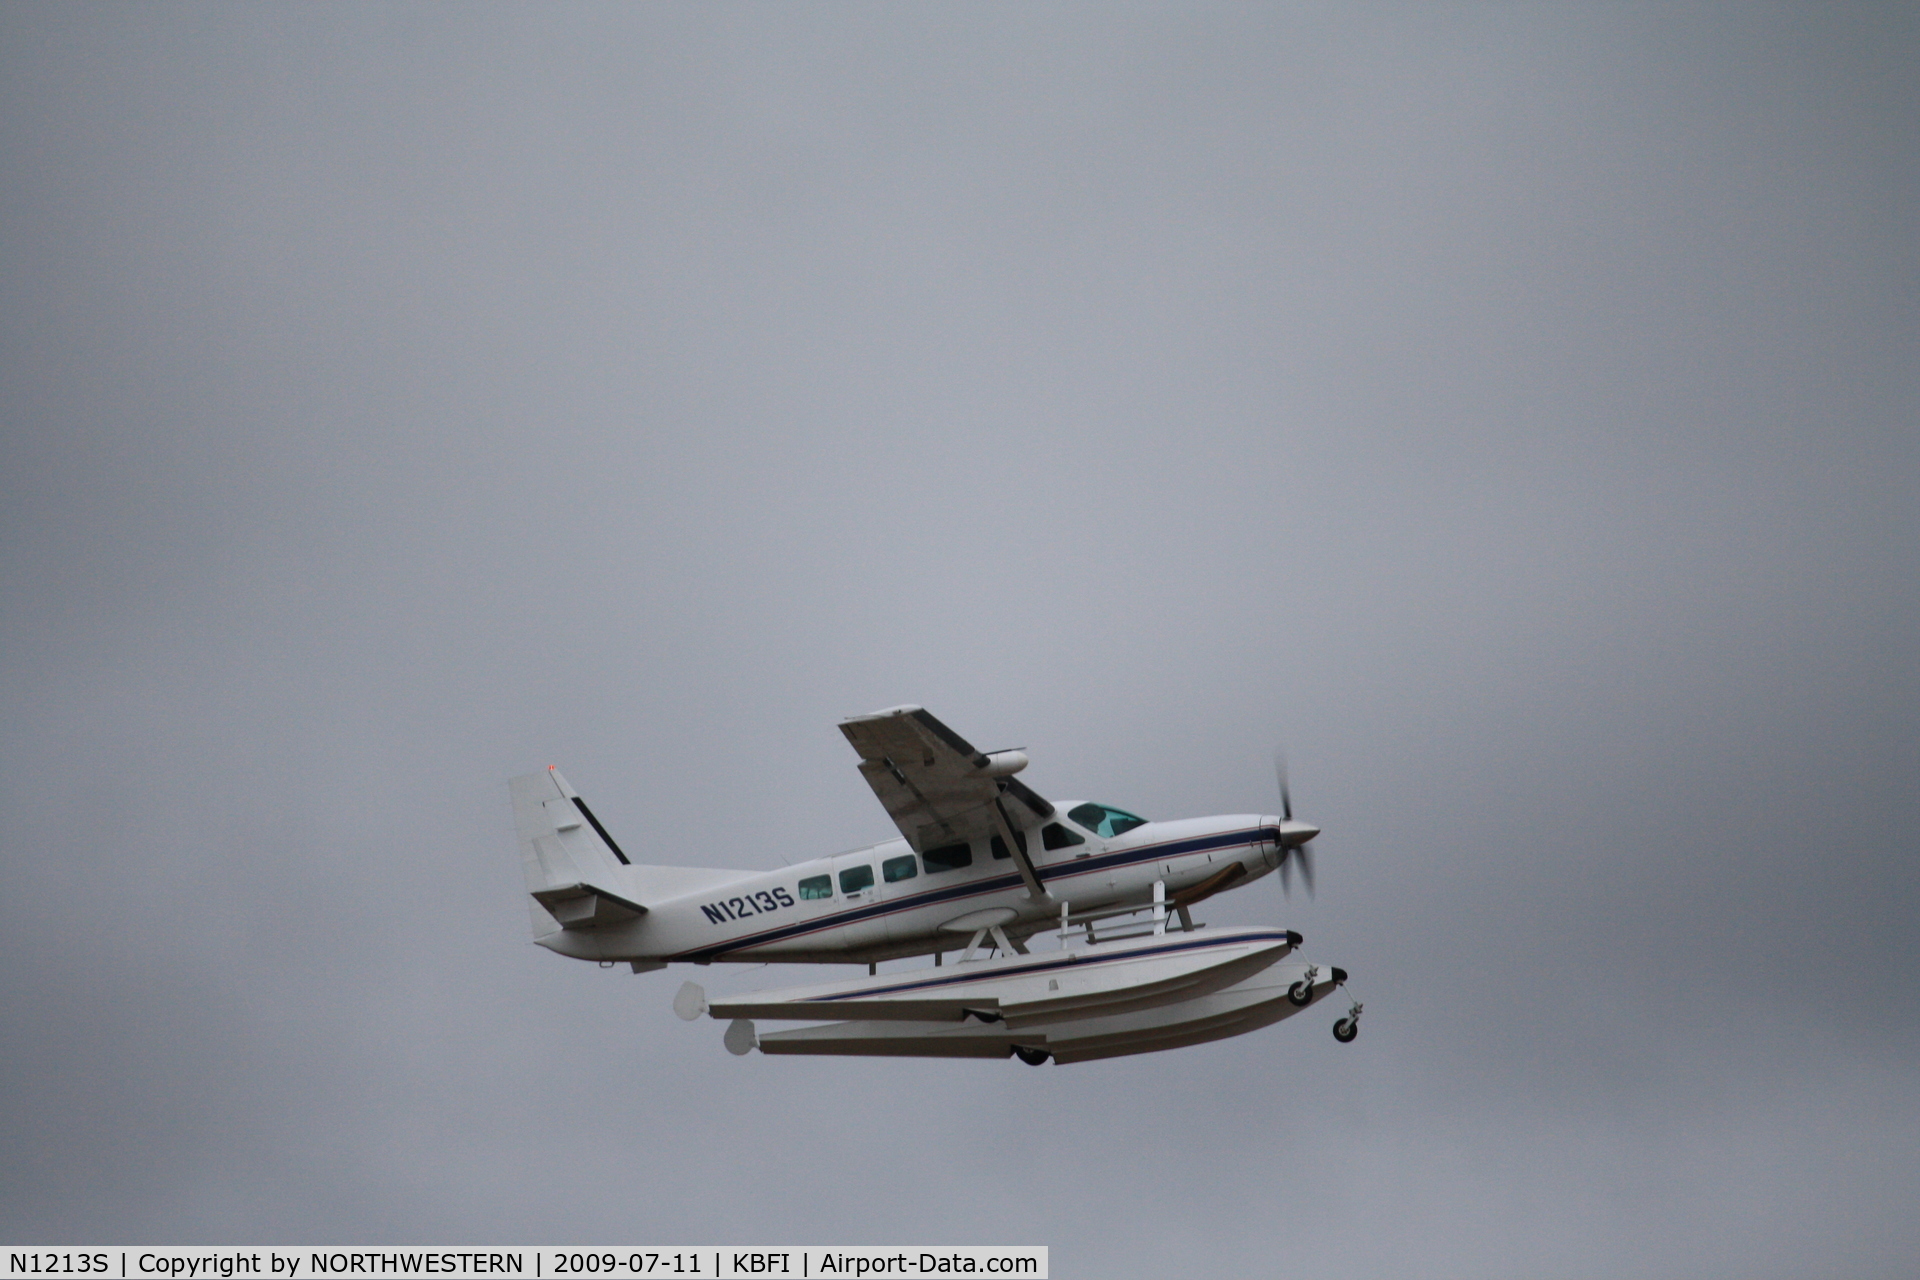 N1213S, 1995 Cessna 208 Caravan I C/N 20800243, SEATTLE-SAN JUAN ISLAND